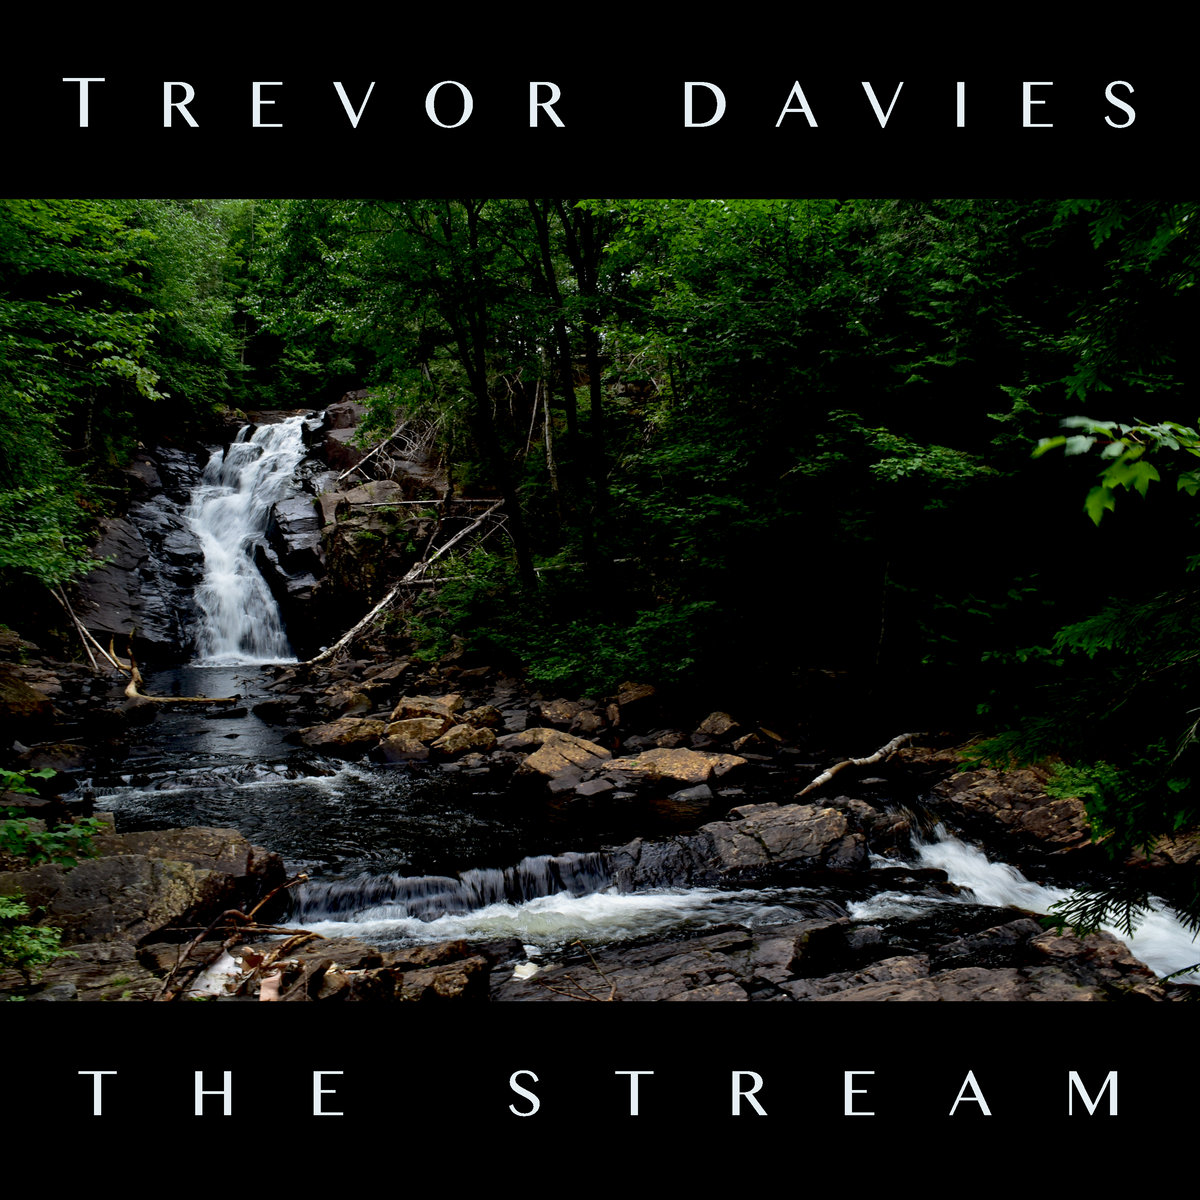 trevor Davies the stream EP artwork - photo of a stream in a woodland